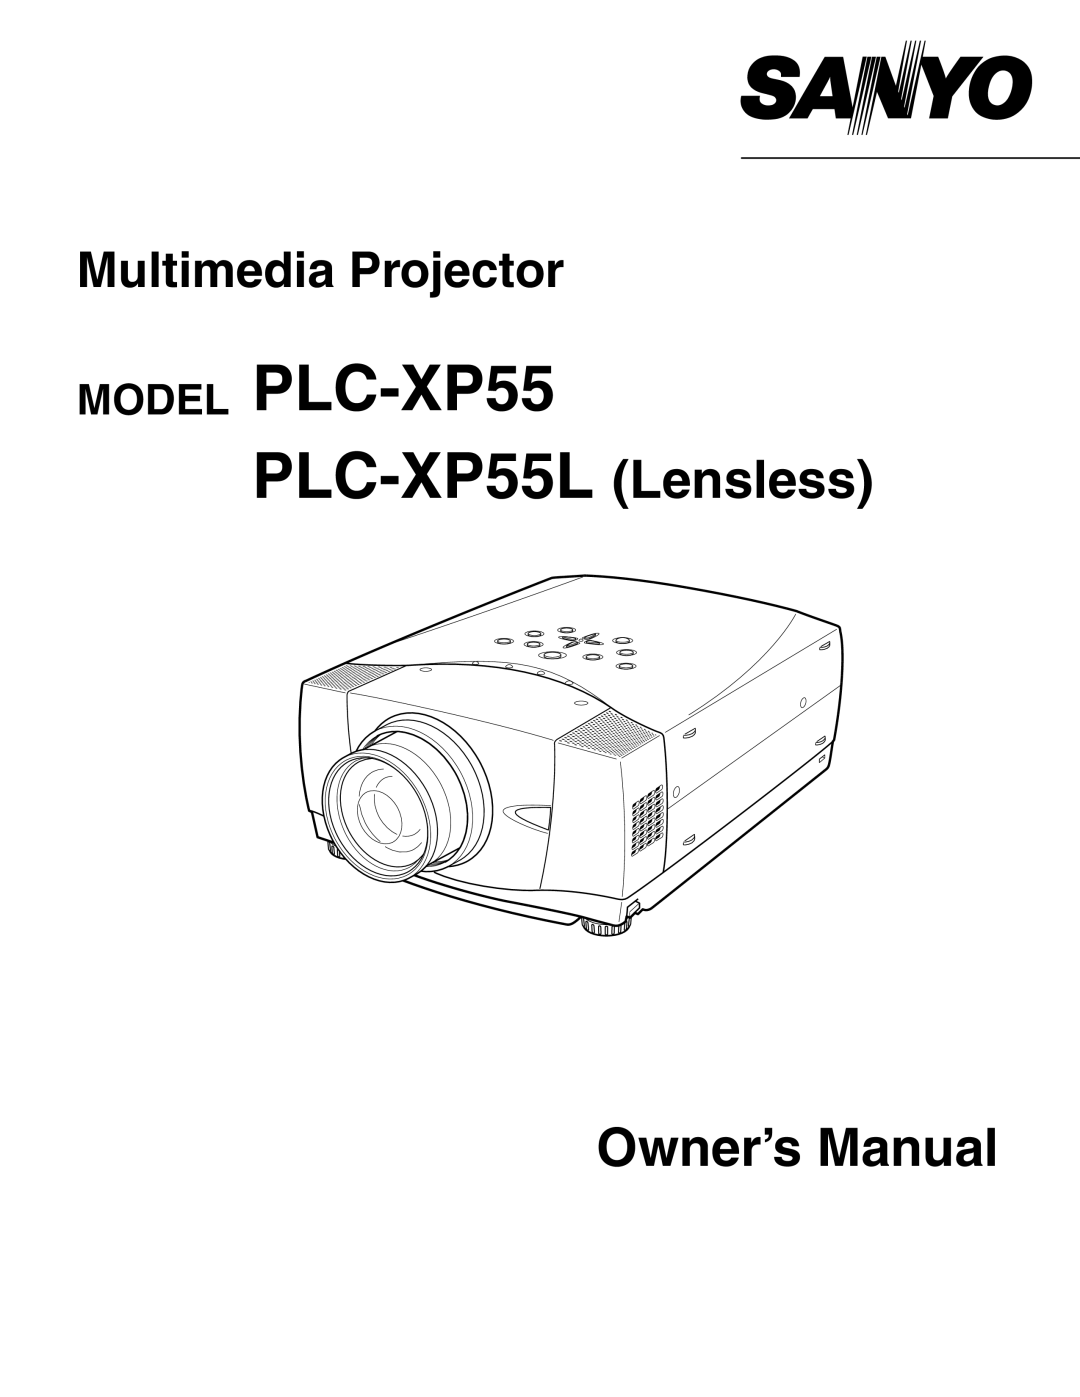 Sanyo owner manual MODEL PLC-XP55 PLC-XP55L Lensless, Multimedia Projector 